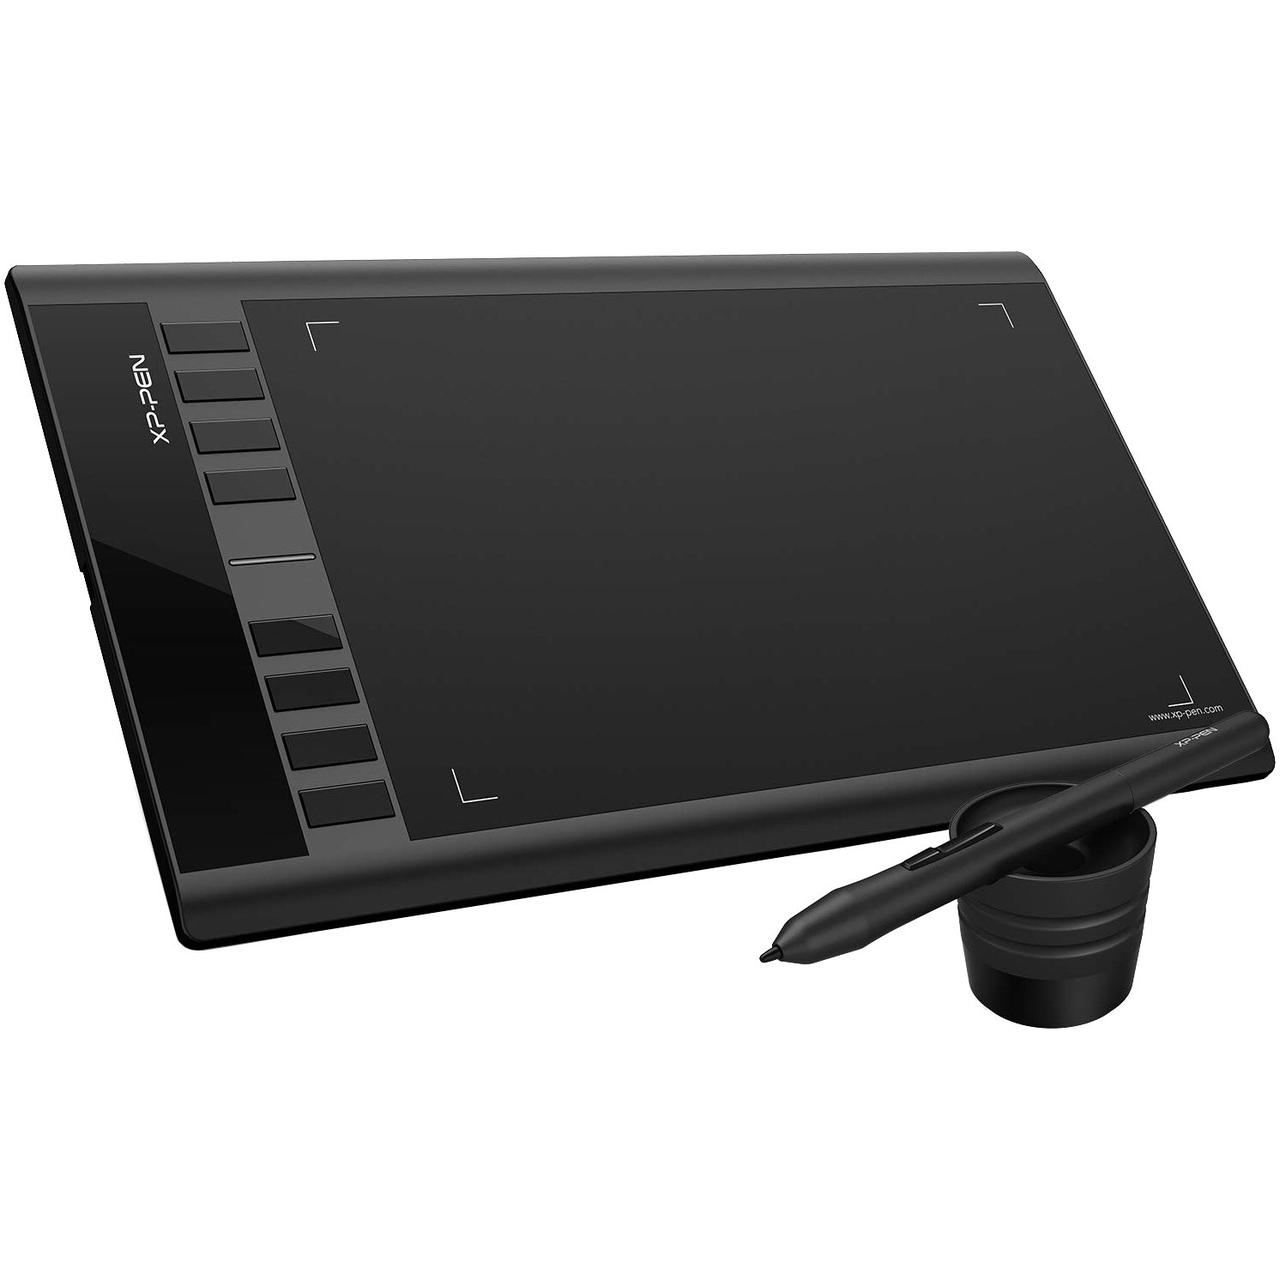 Графічний планшет XP-PEN Star 03 V2 для малювання ретуші Black (Star03V2)